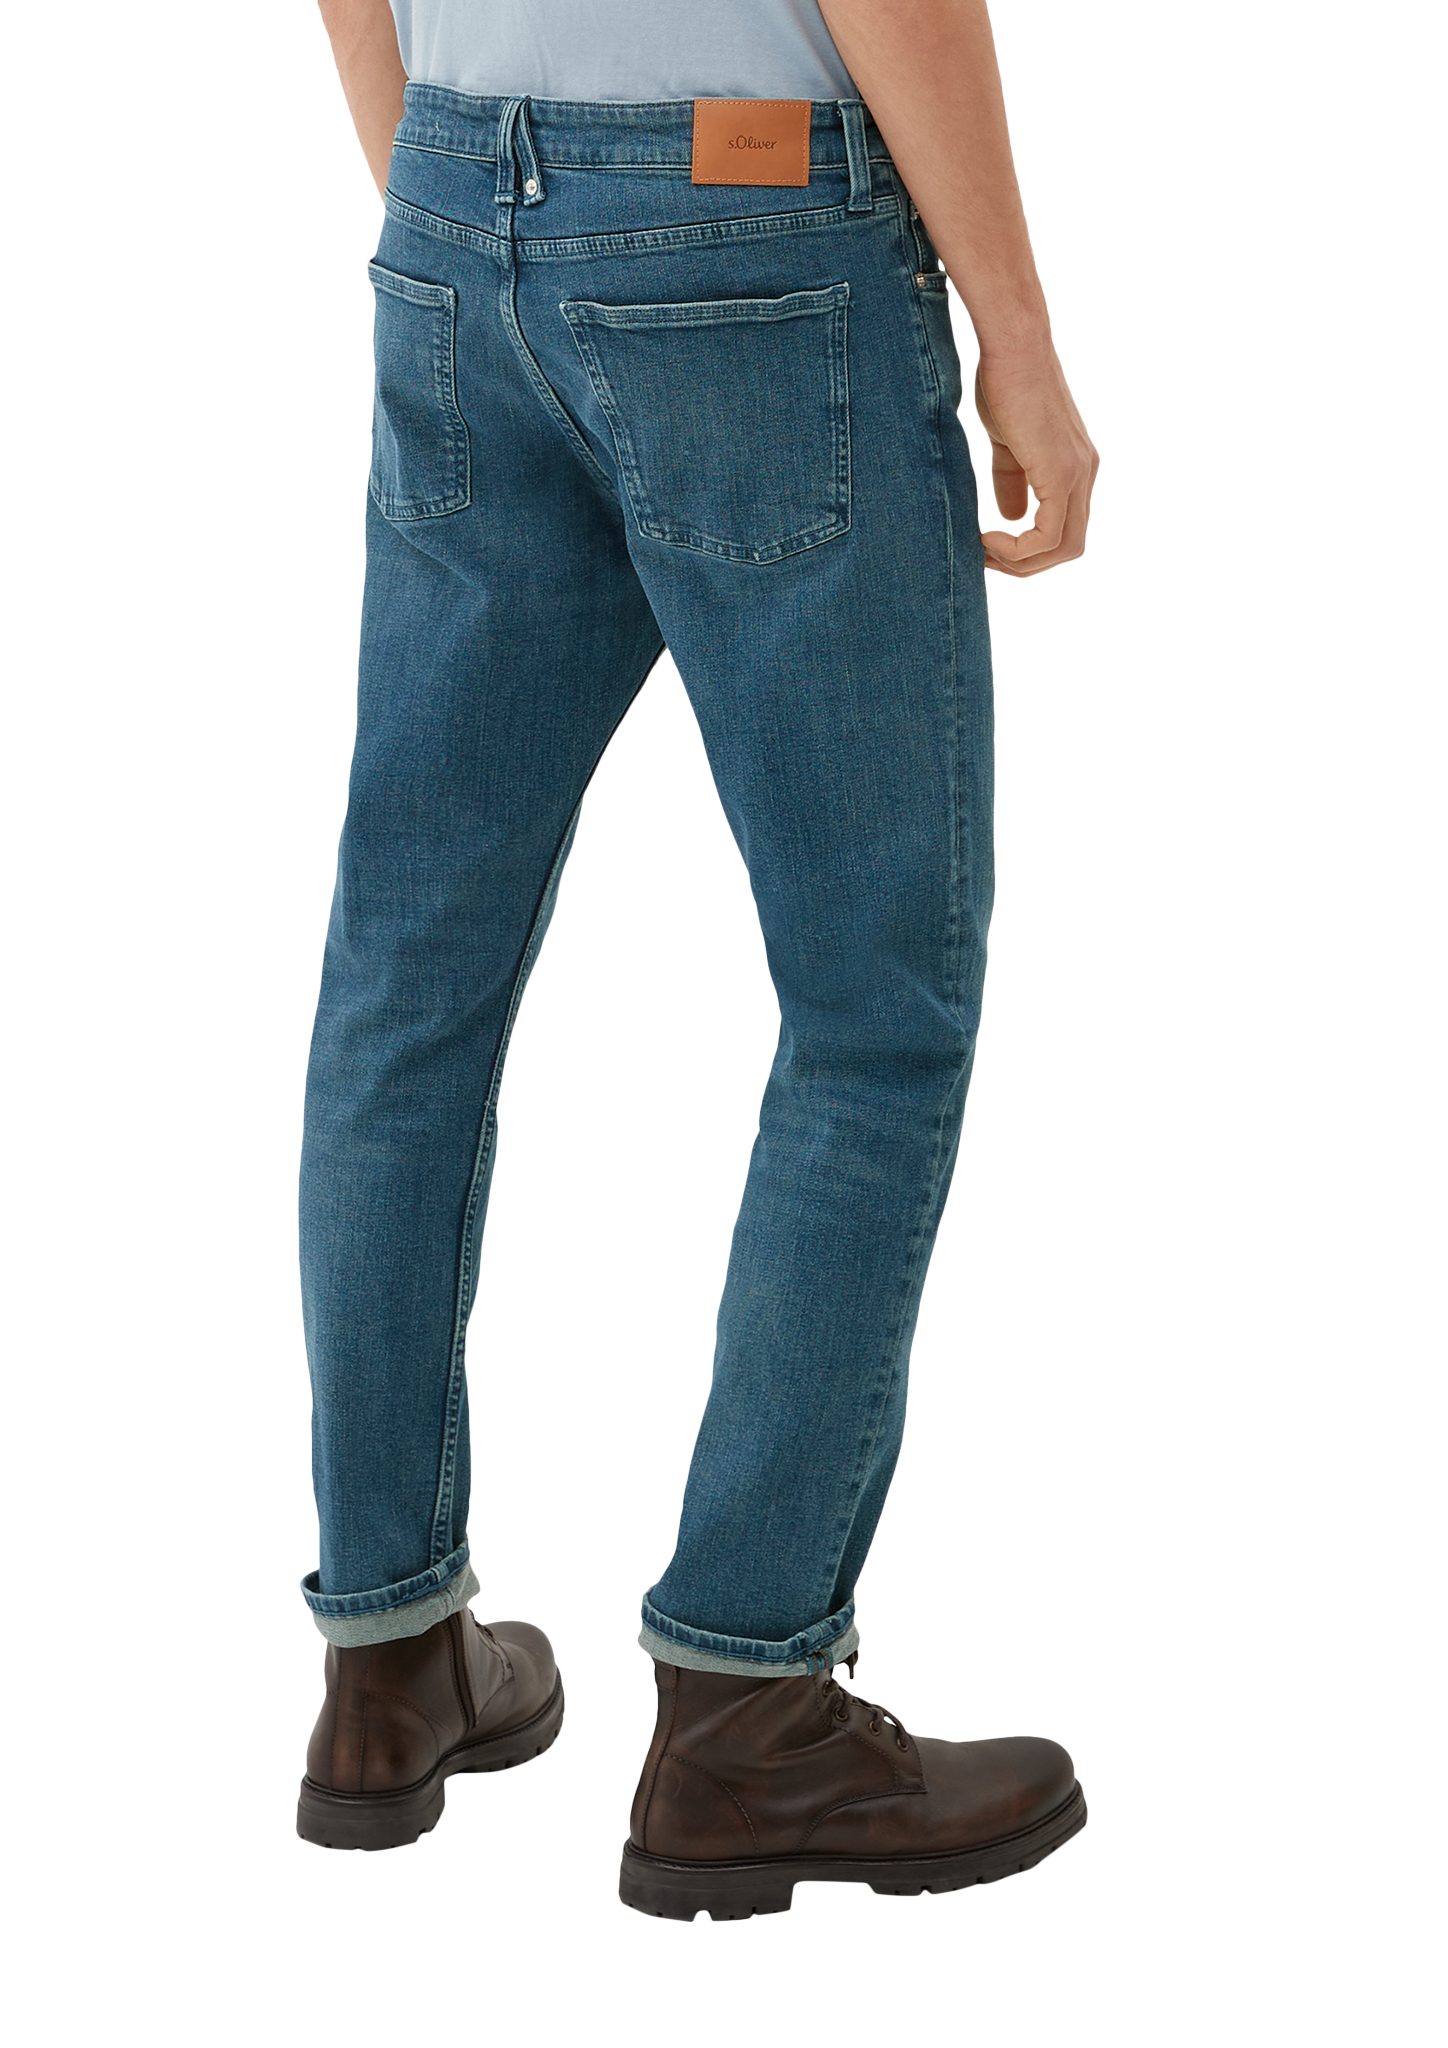 Waschung Leg Slim / Regular Fit Stoffhose / Jeans High / Rise s.Oliver blau